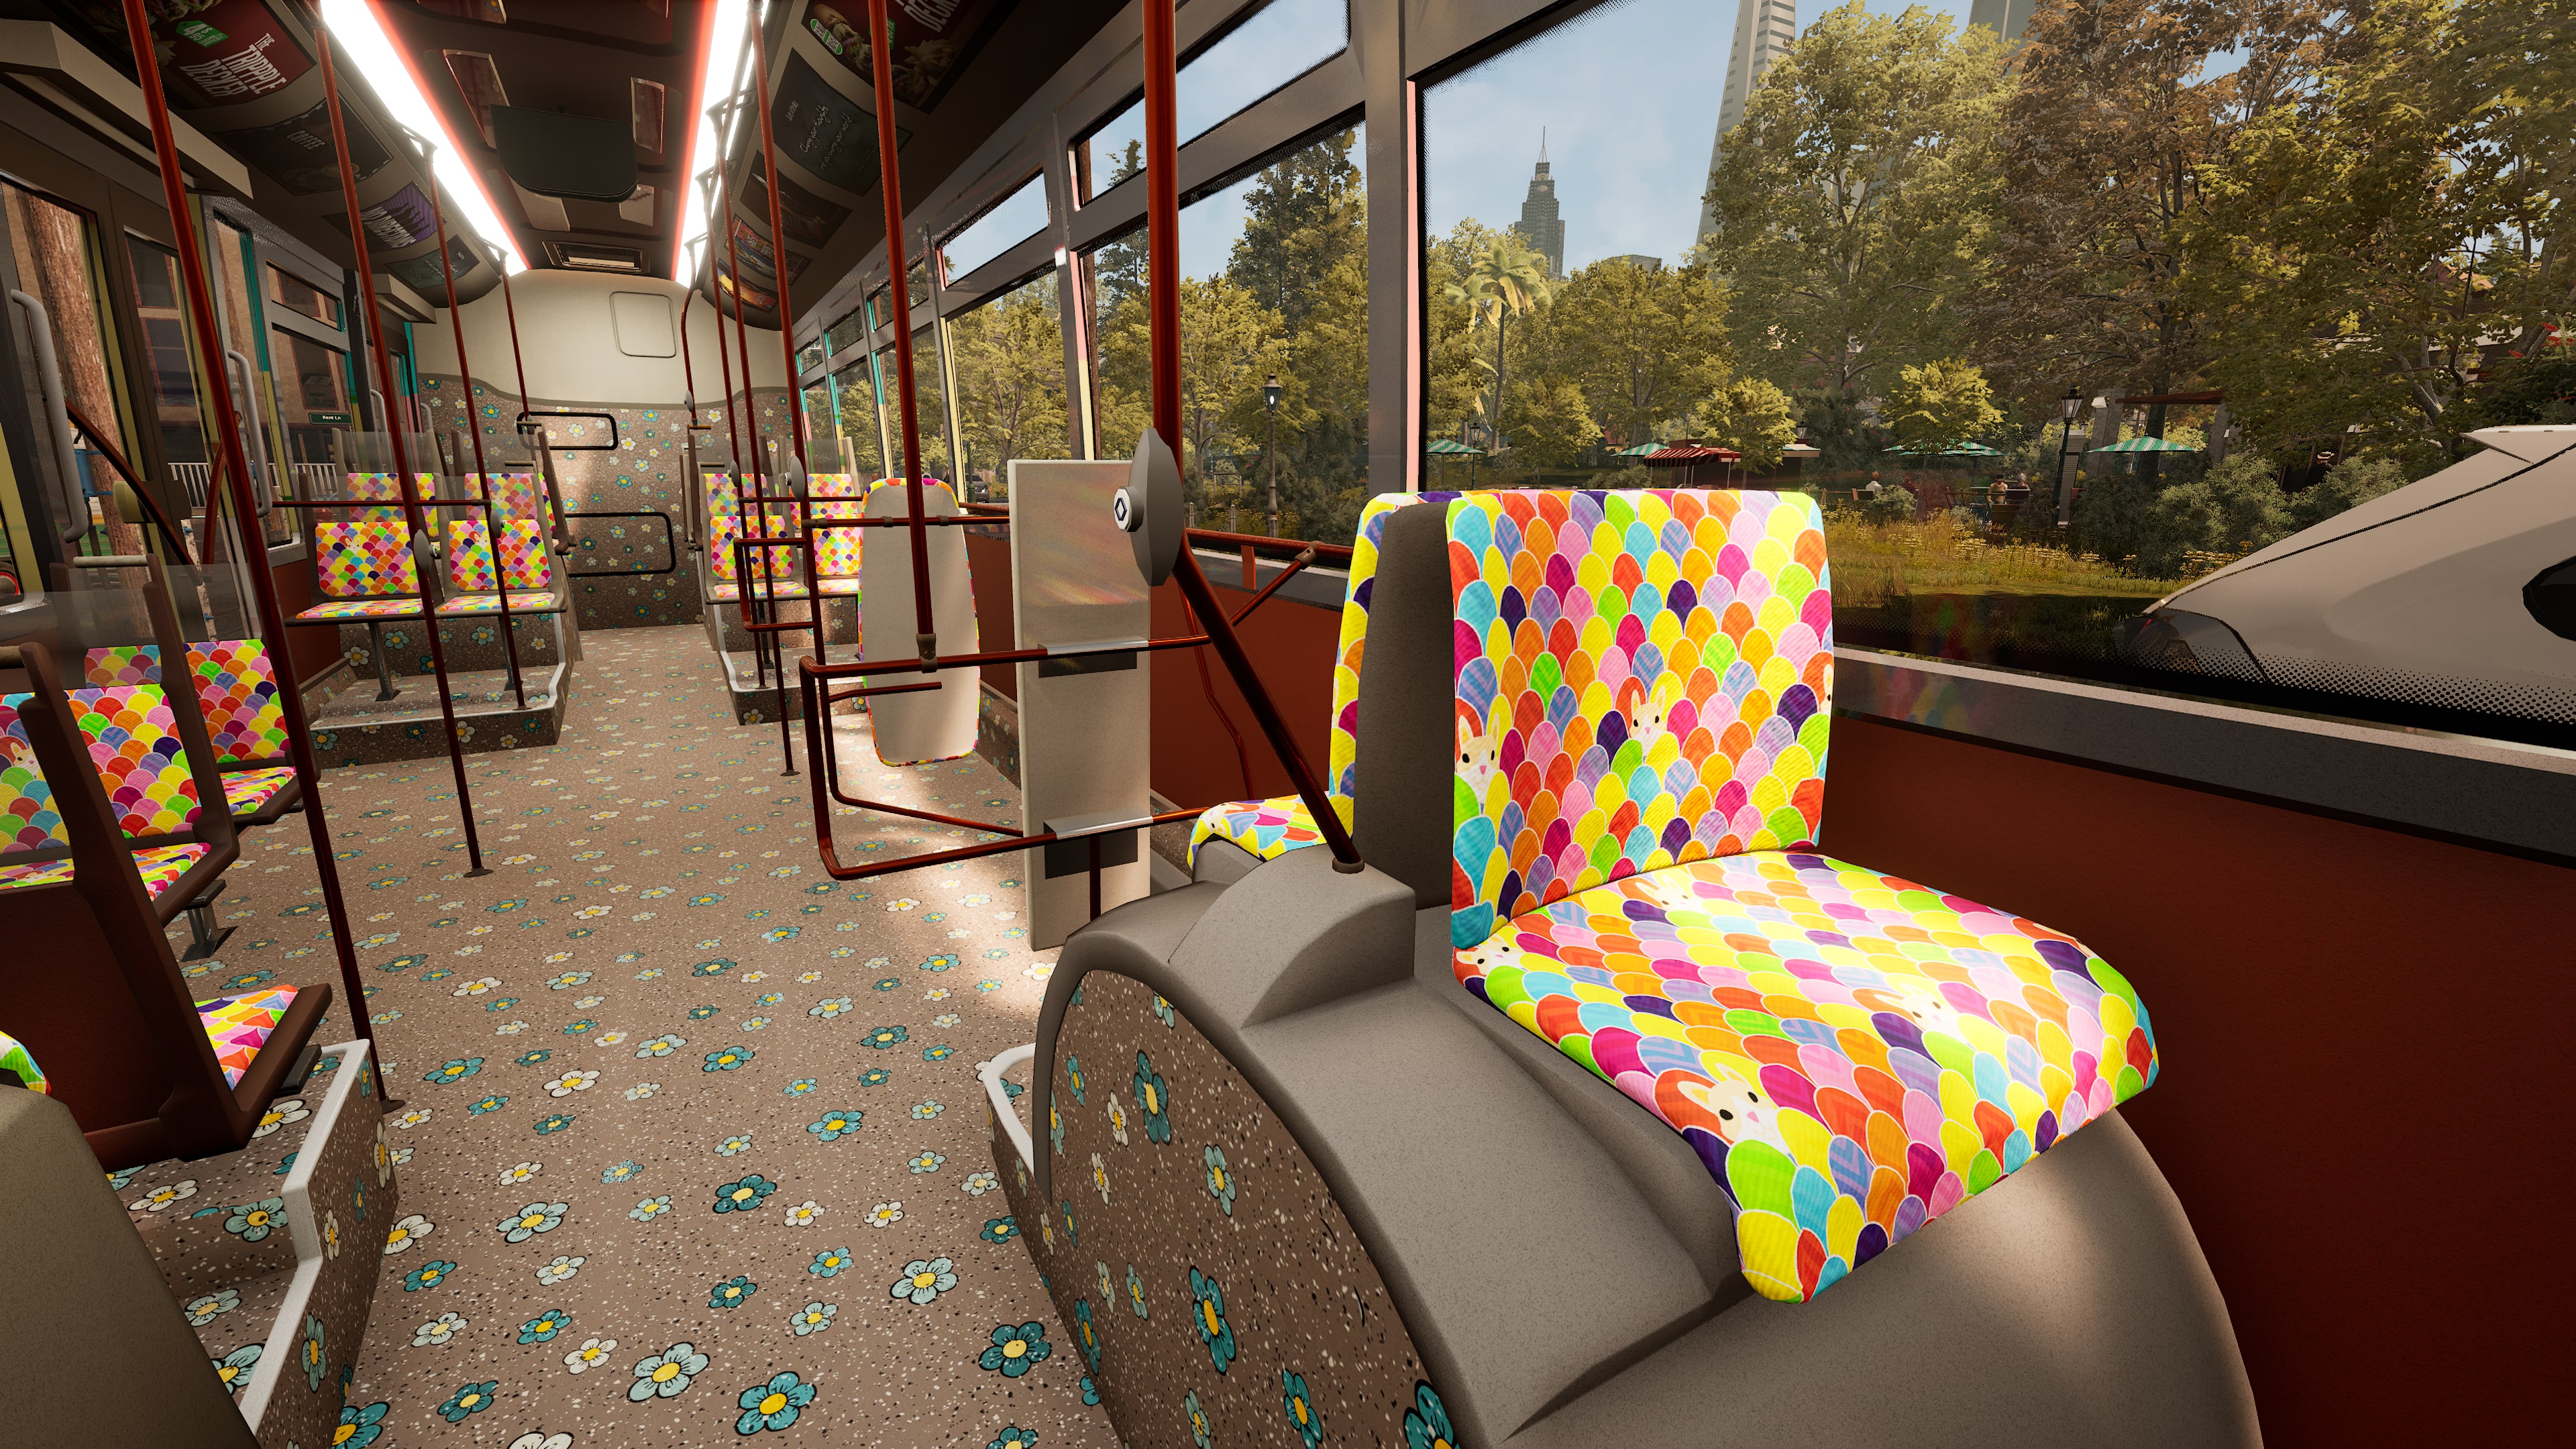 Bus Simulator 21 Next Stop - Easter Interior Pack